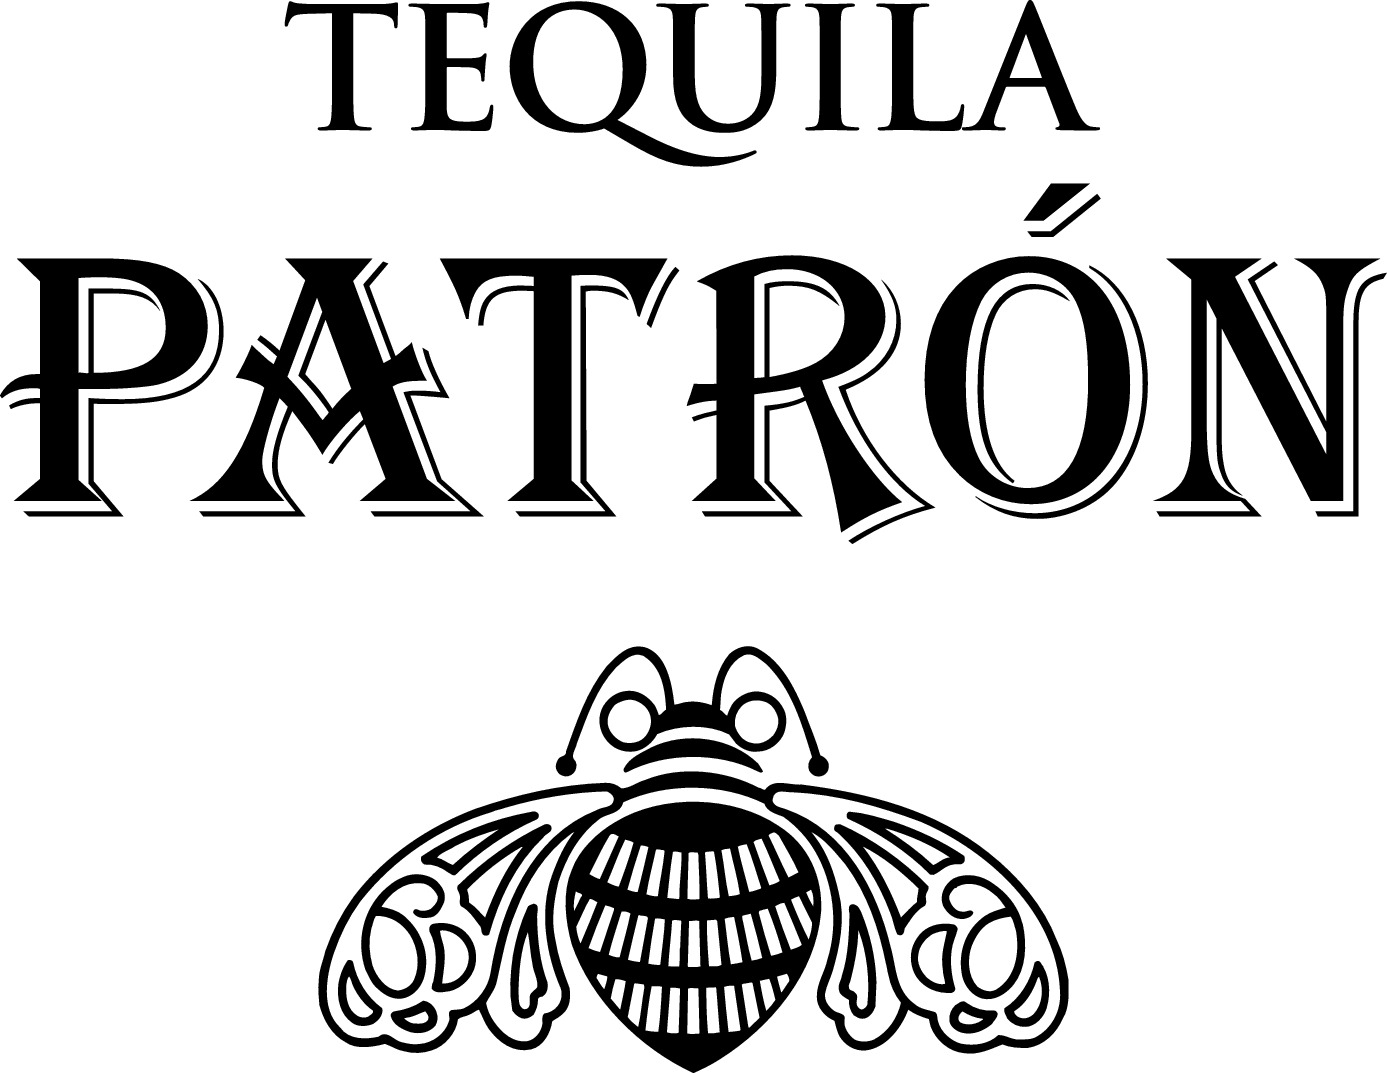 Patrón Anejo Tequila 40%vol 0,7l - 100% Agave